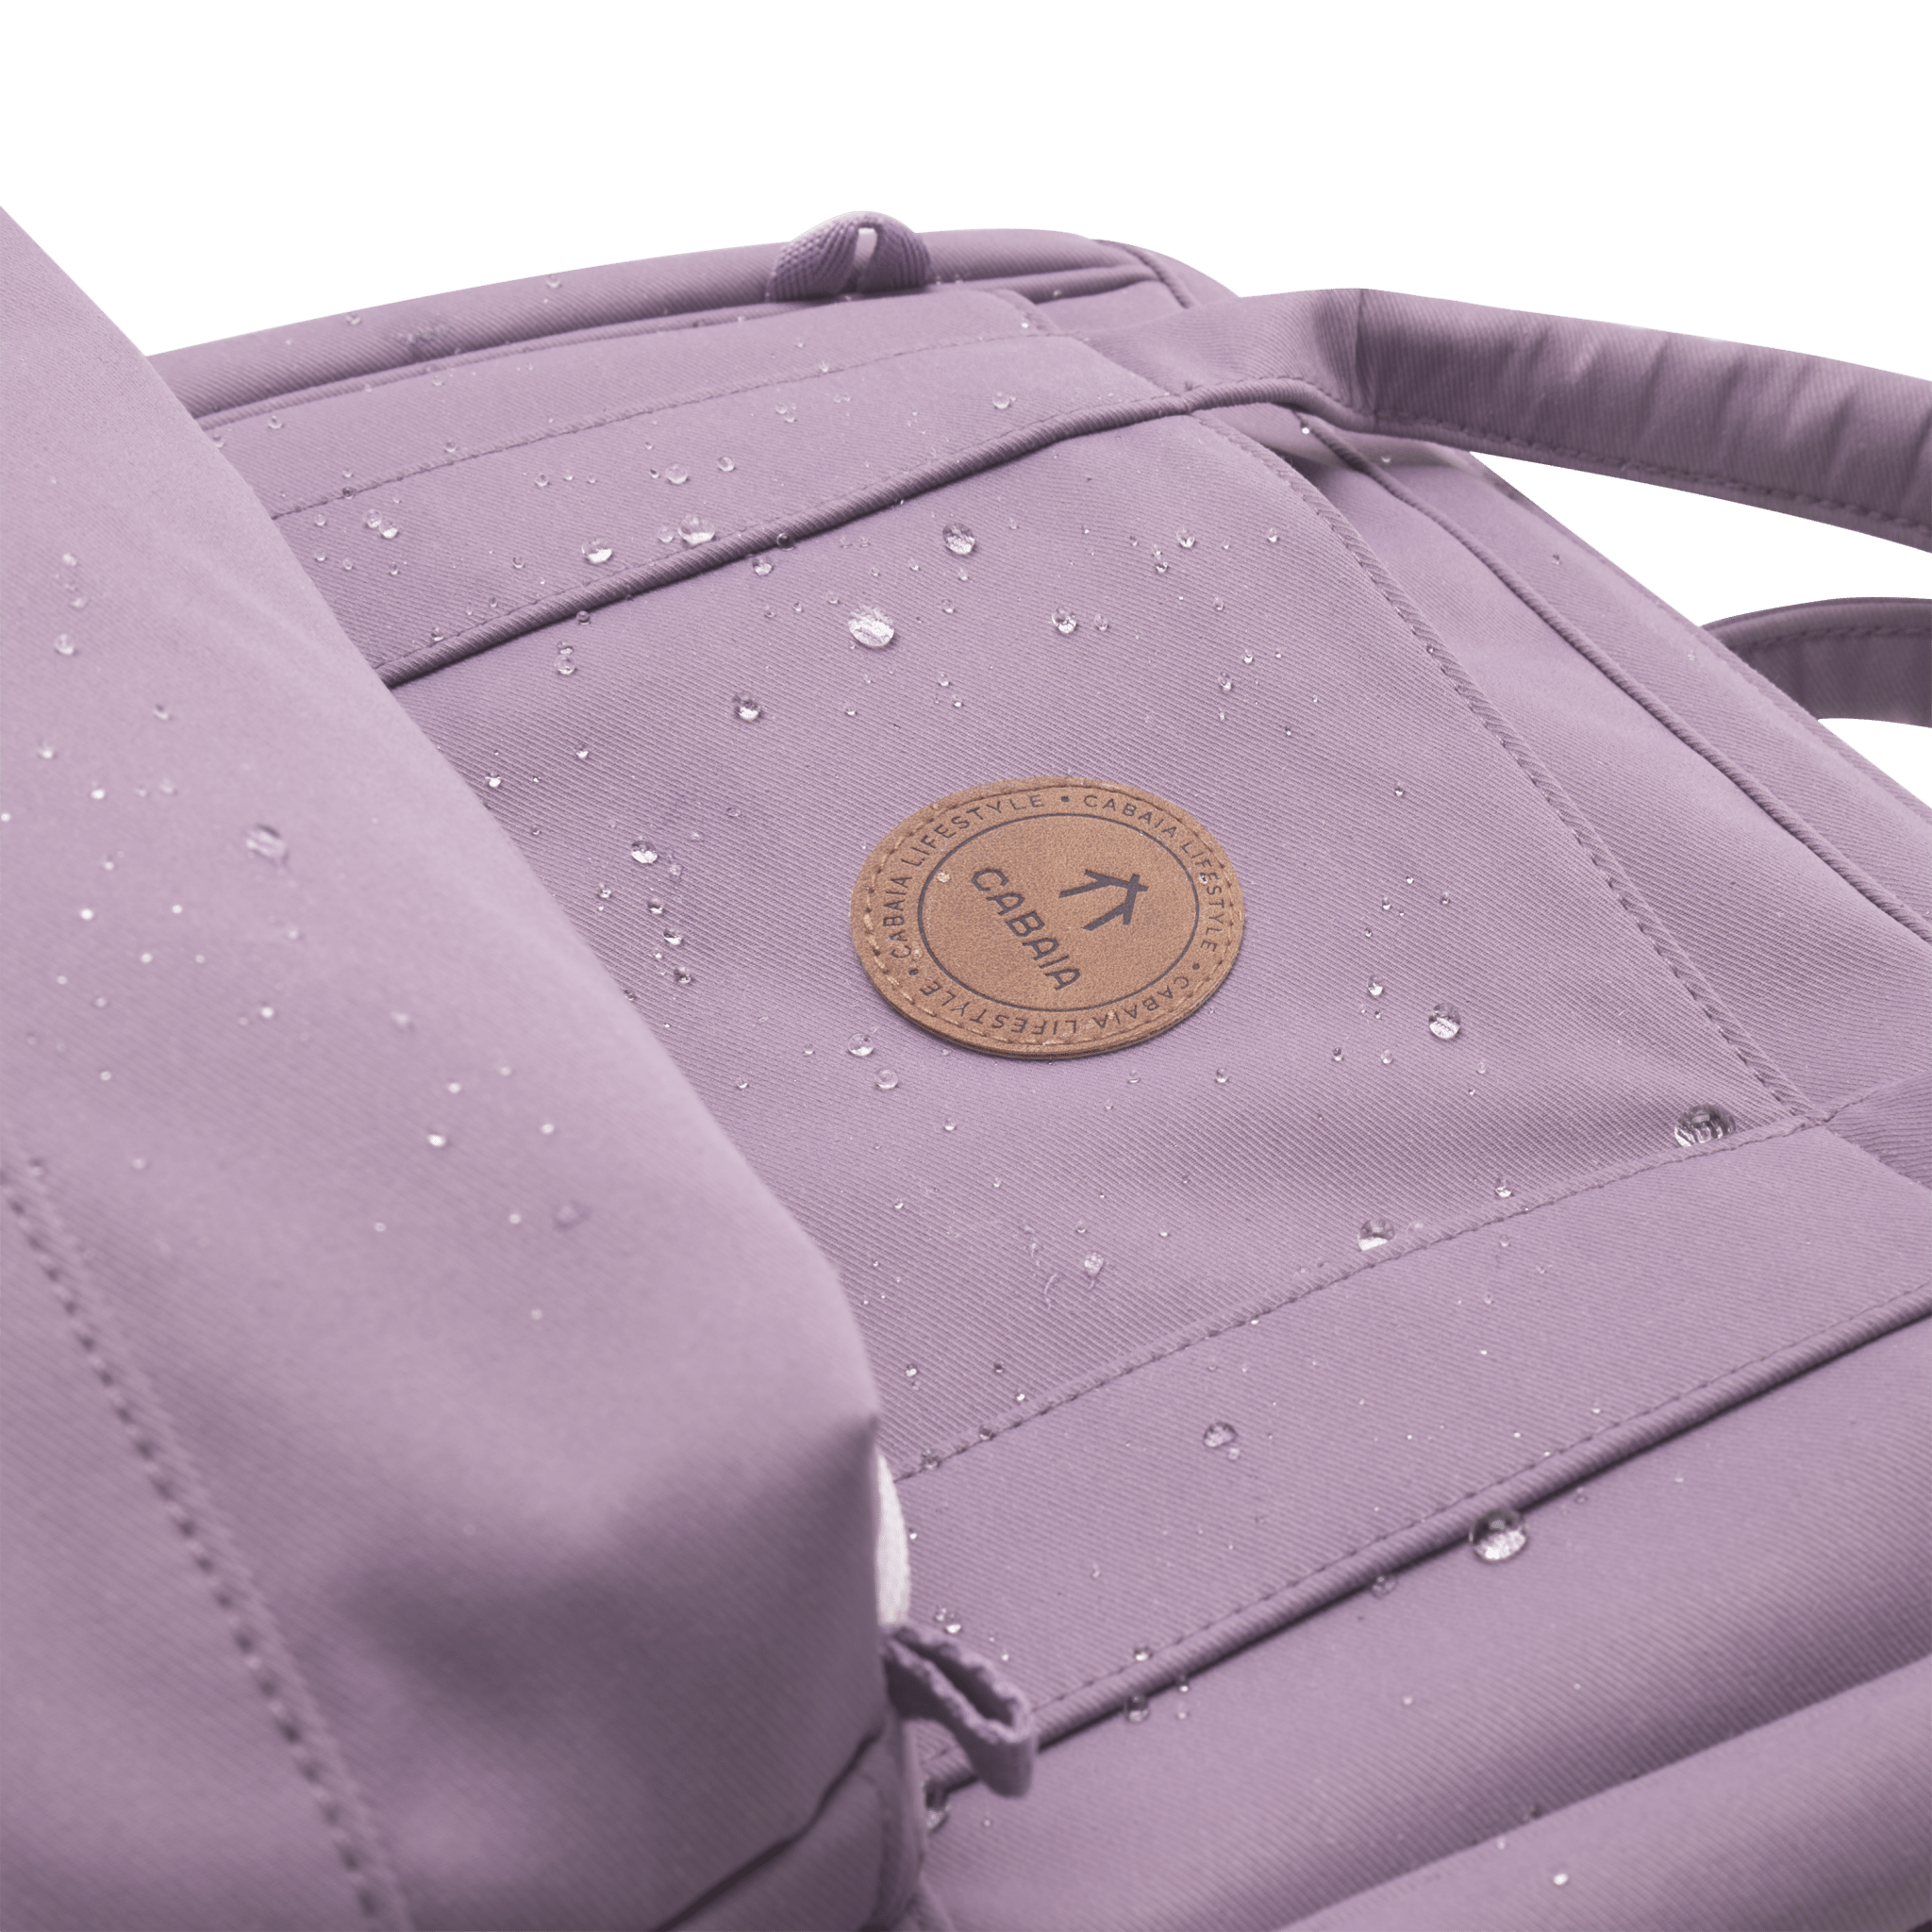 CABAÏA - Backpack Baby bag Medium - Boutique Bubbles